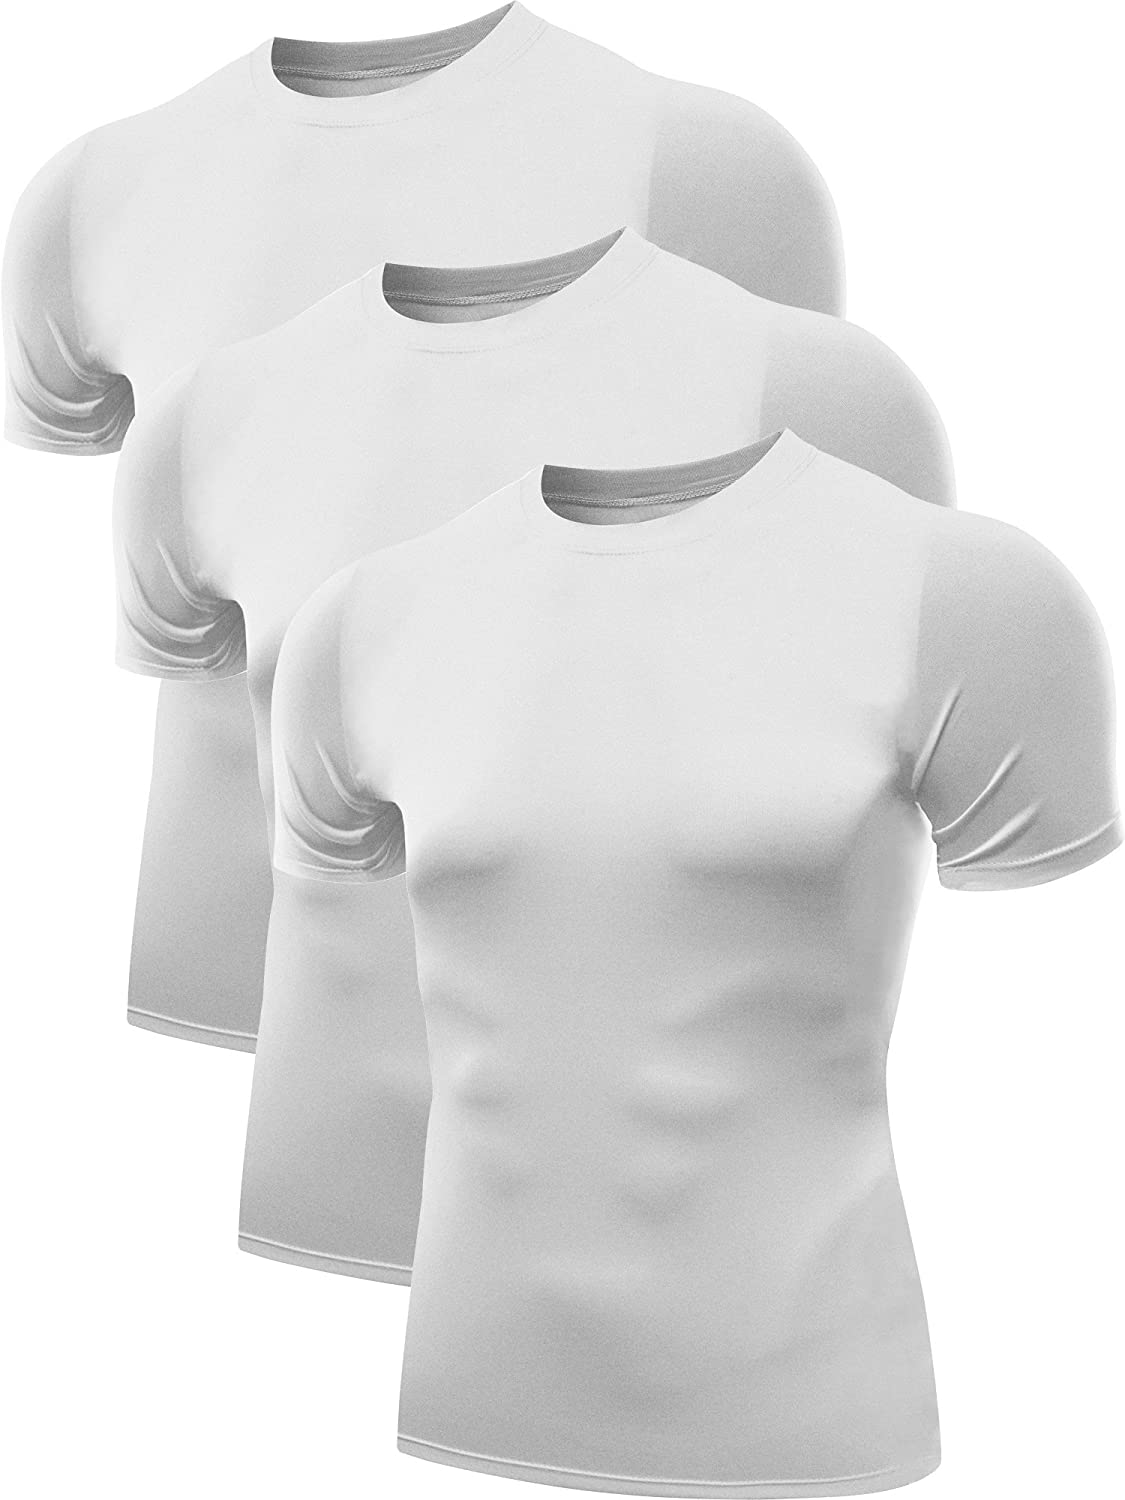 Neleus Men's Compression Baselayer Athletic Workout T Shirts 1 Or